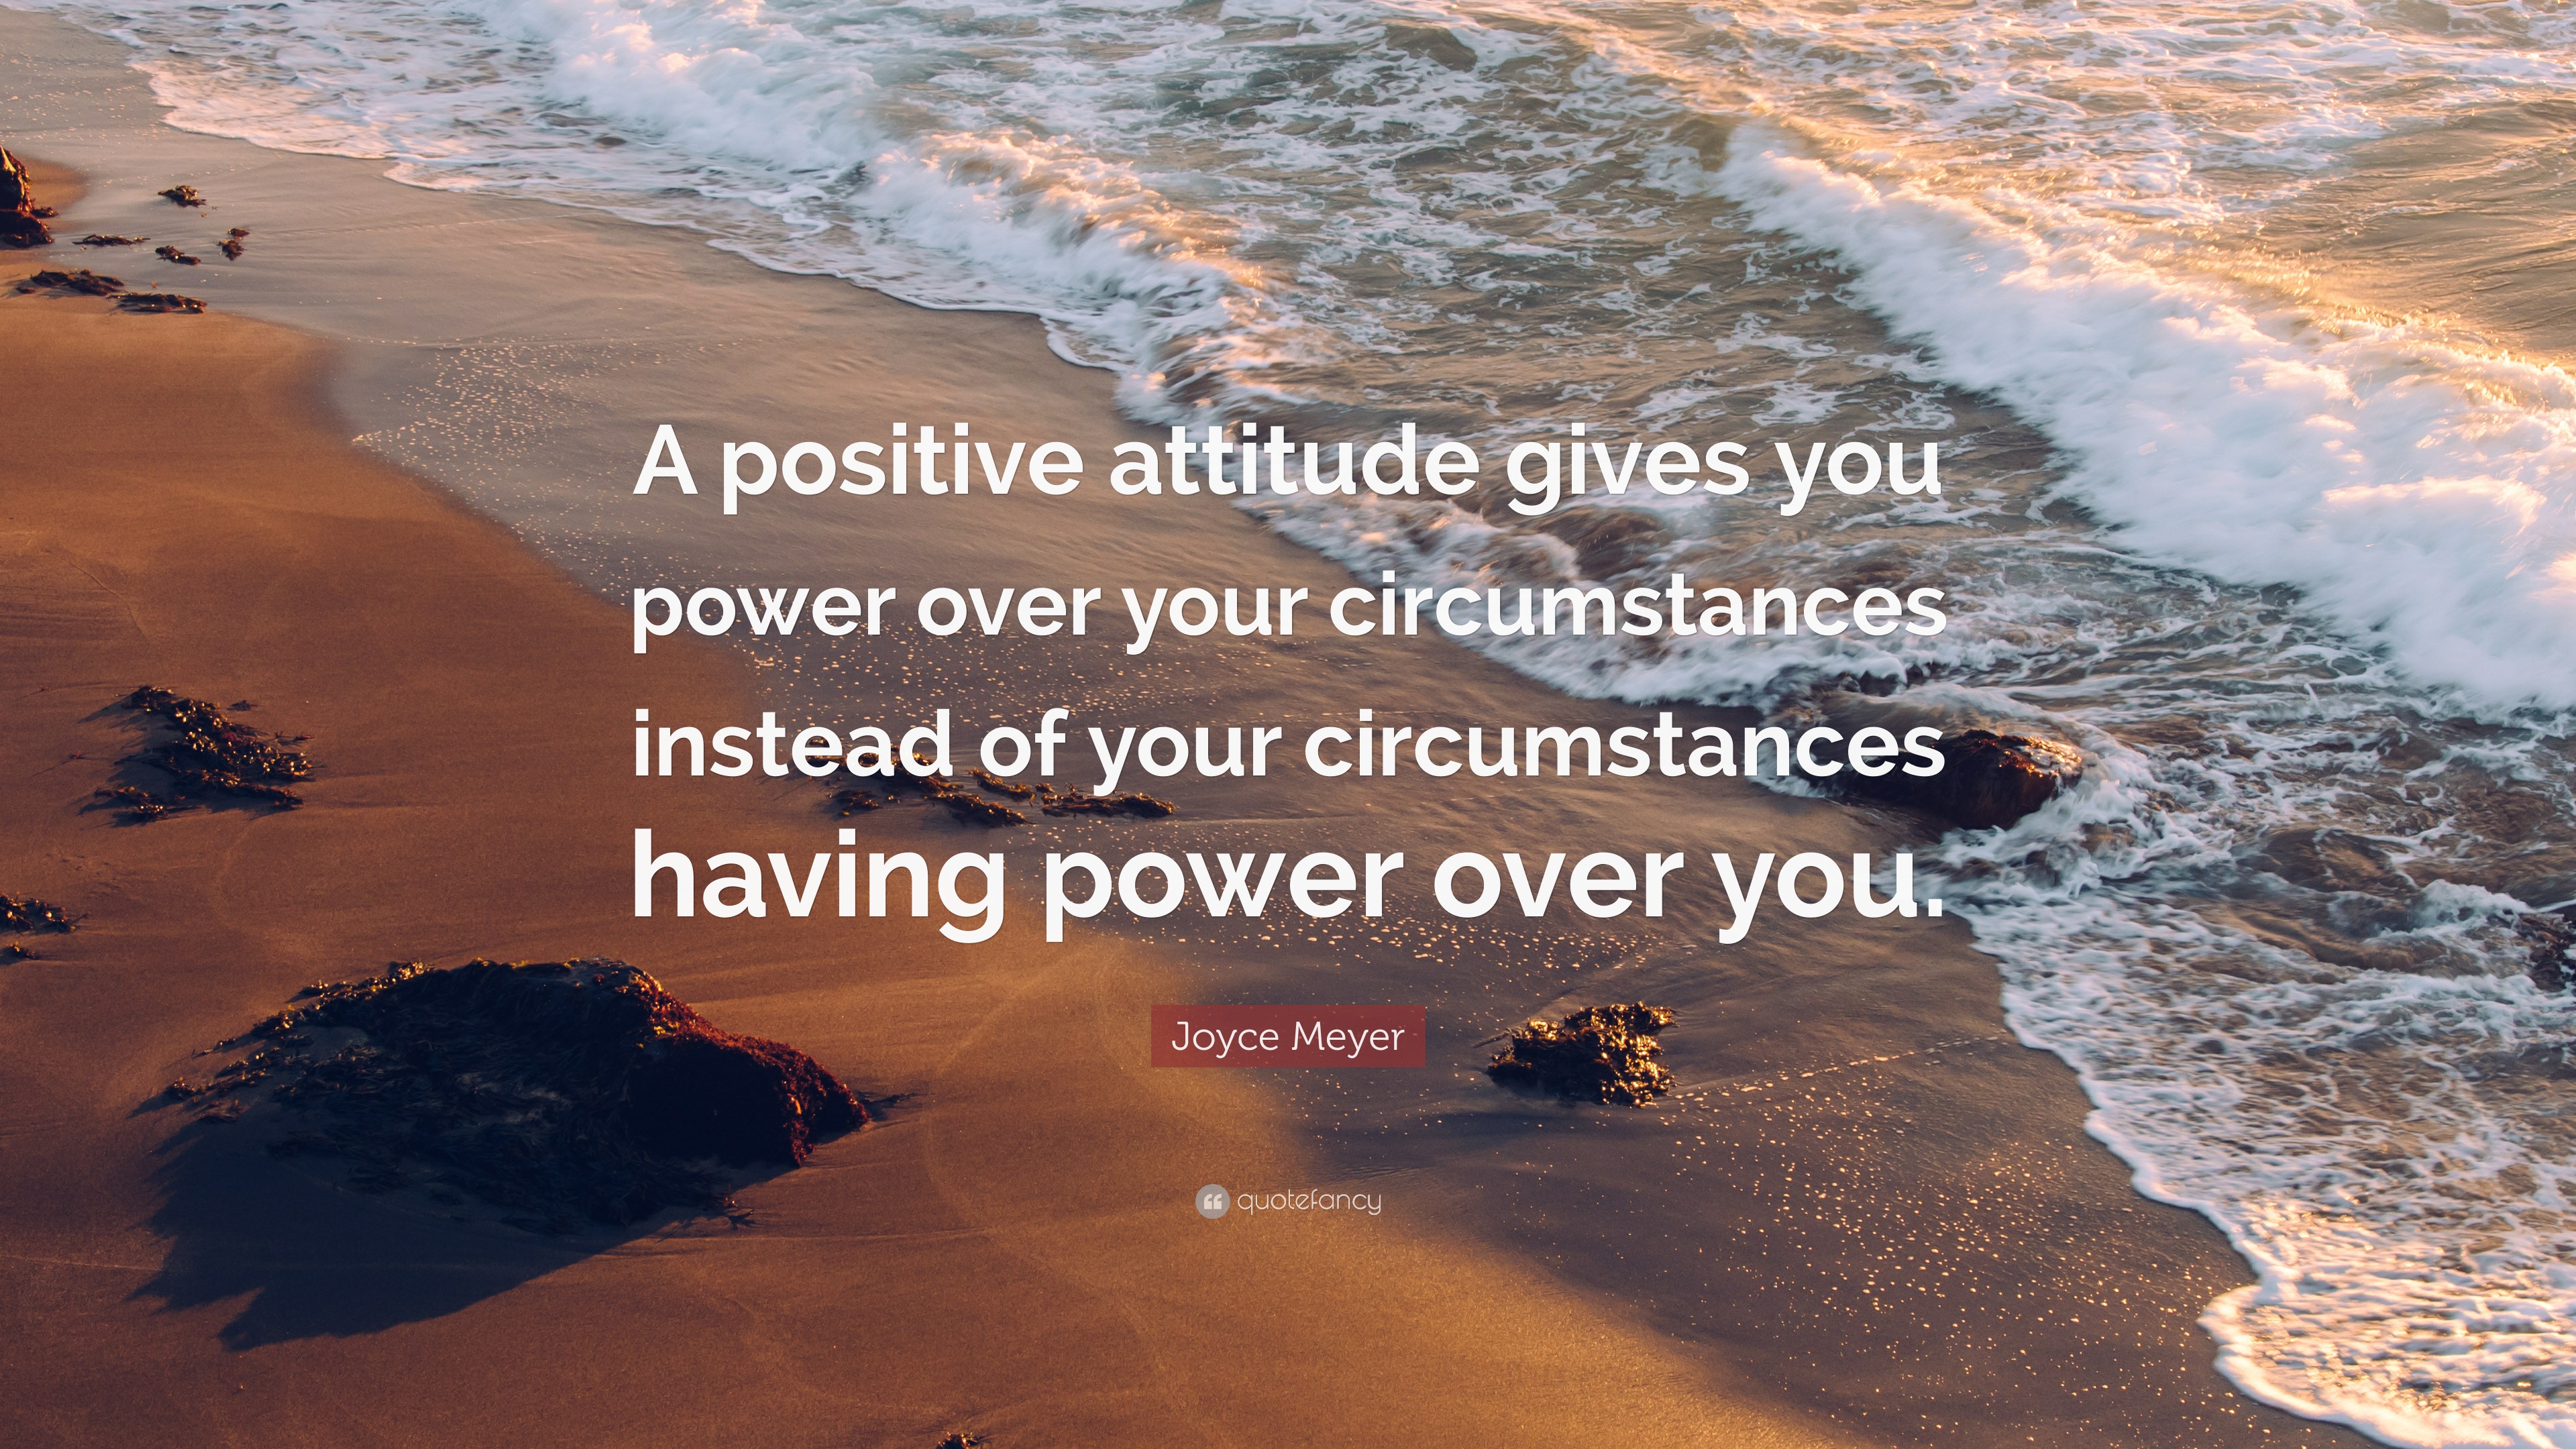 Joyce Meyer Quote “A positive attitude gives you power